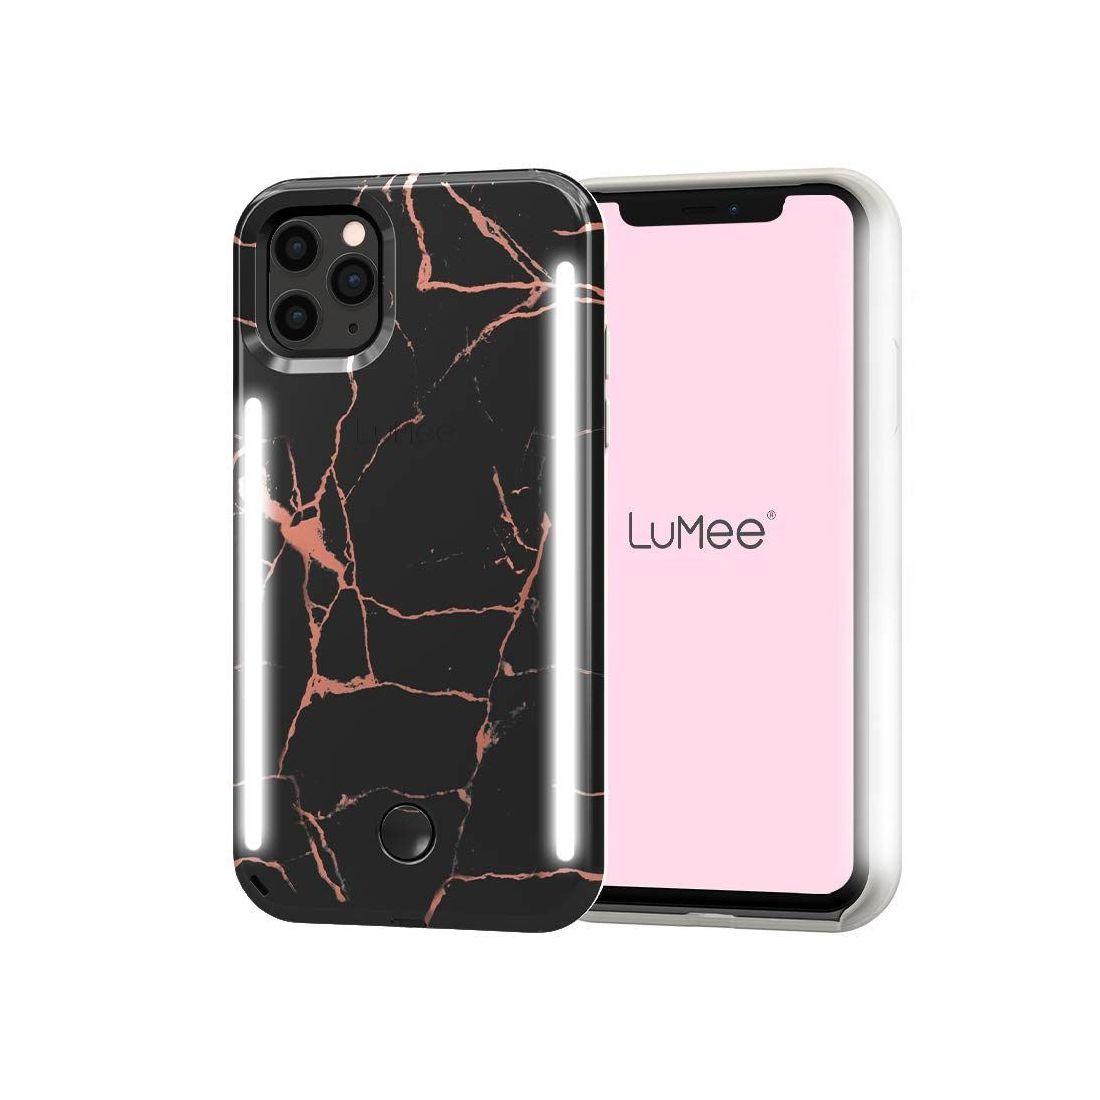 Lumee Duo Case Metallic Marble Black/Rose Gold for iPhone 11 Pro